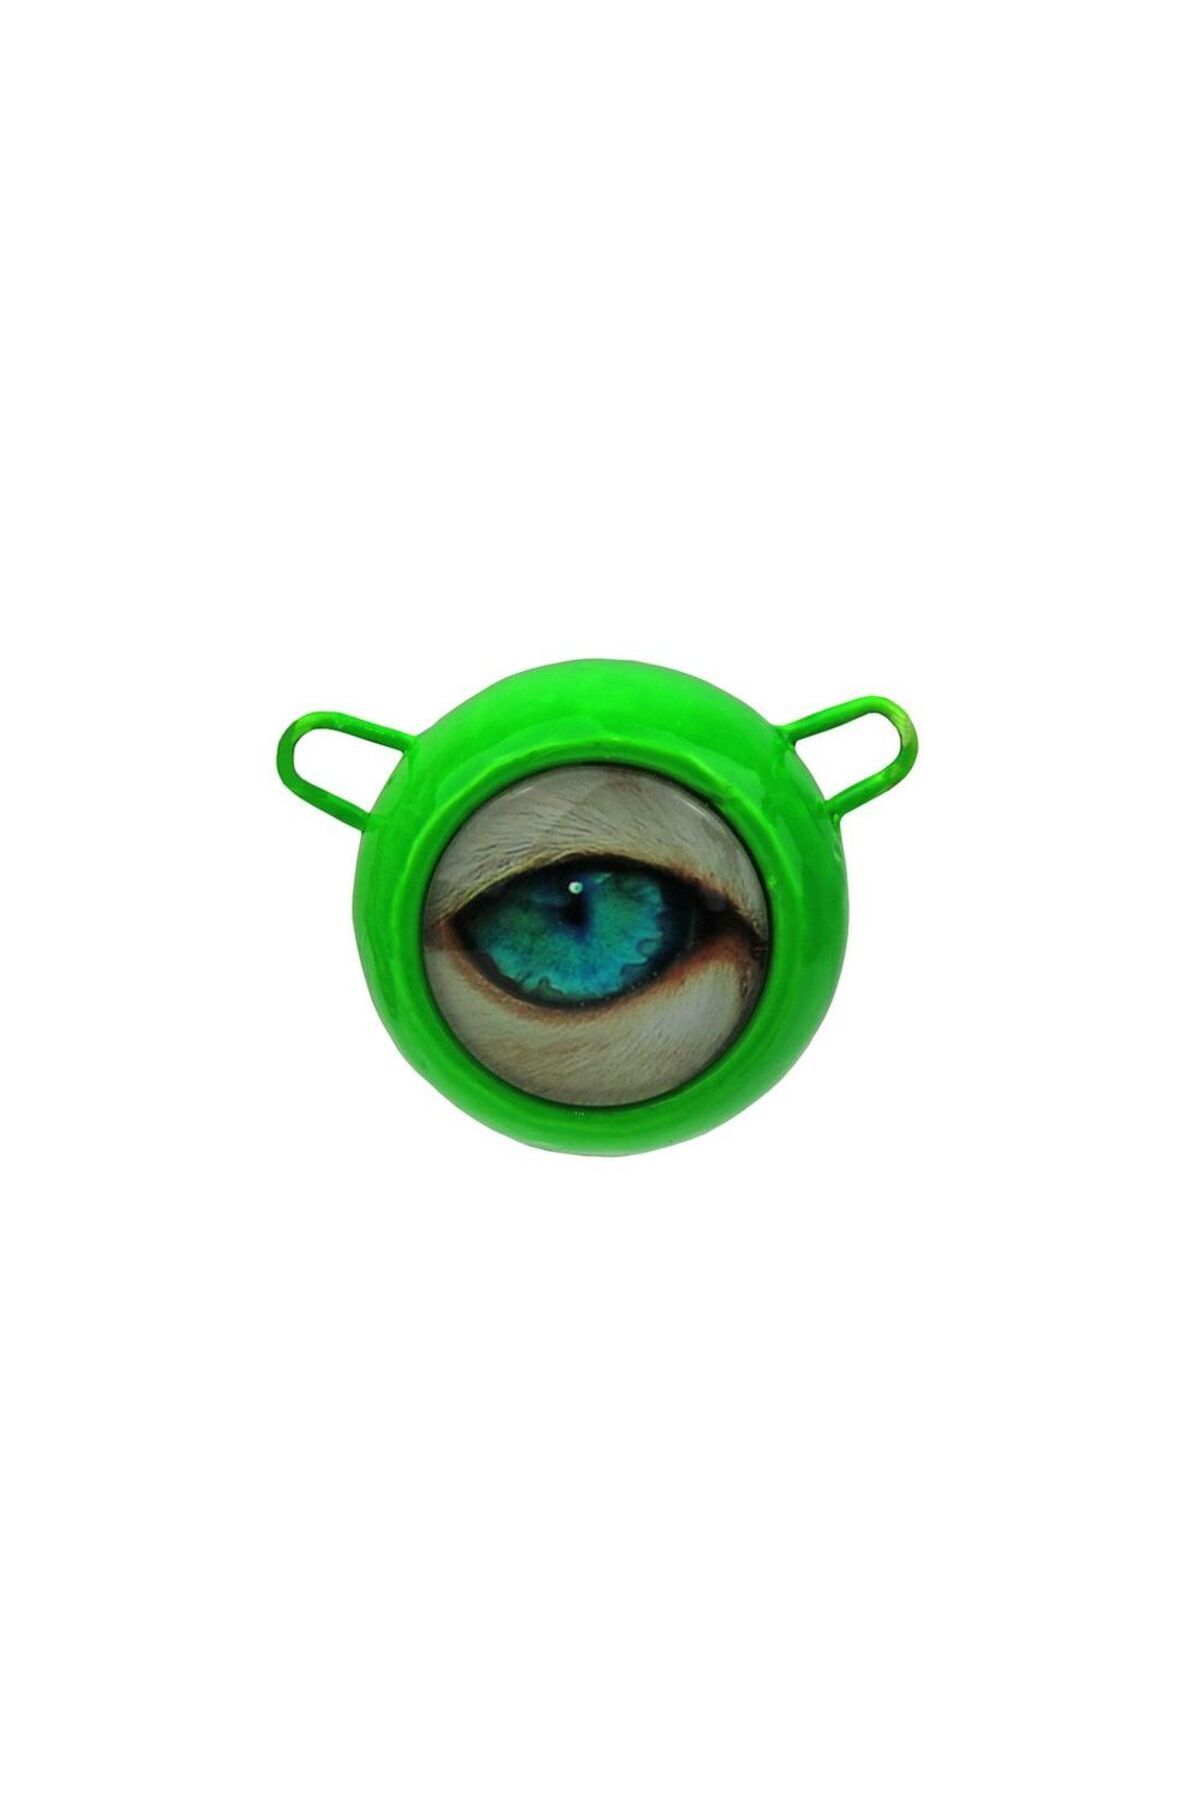 Anchor Melek Göz Yeşil 300 gr